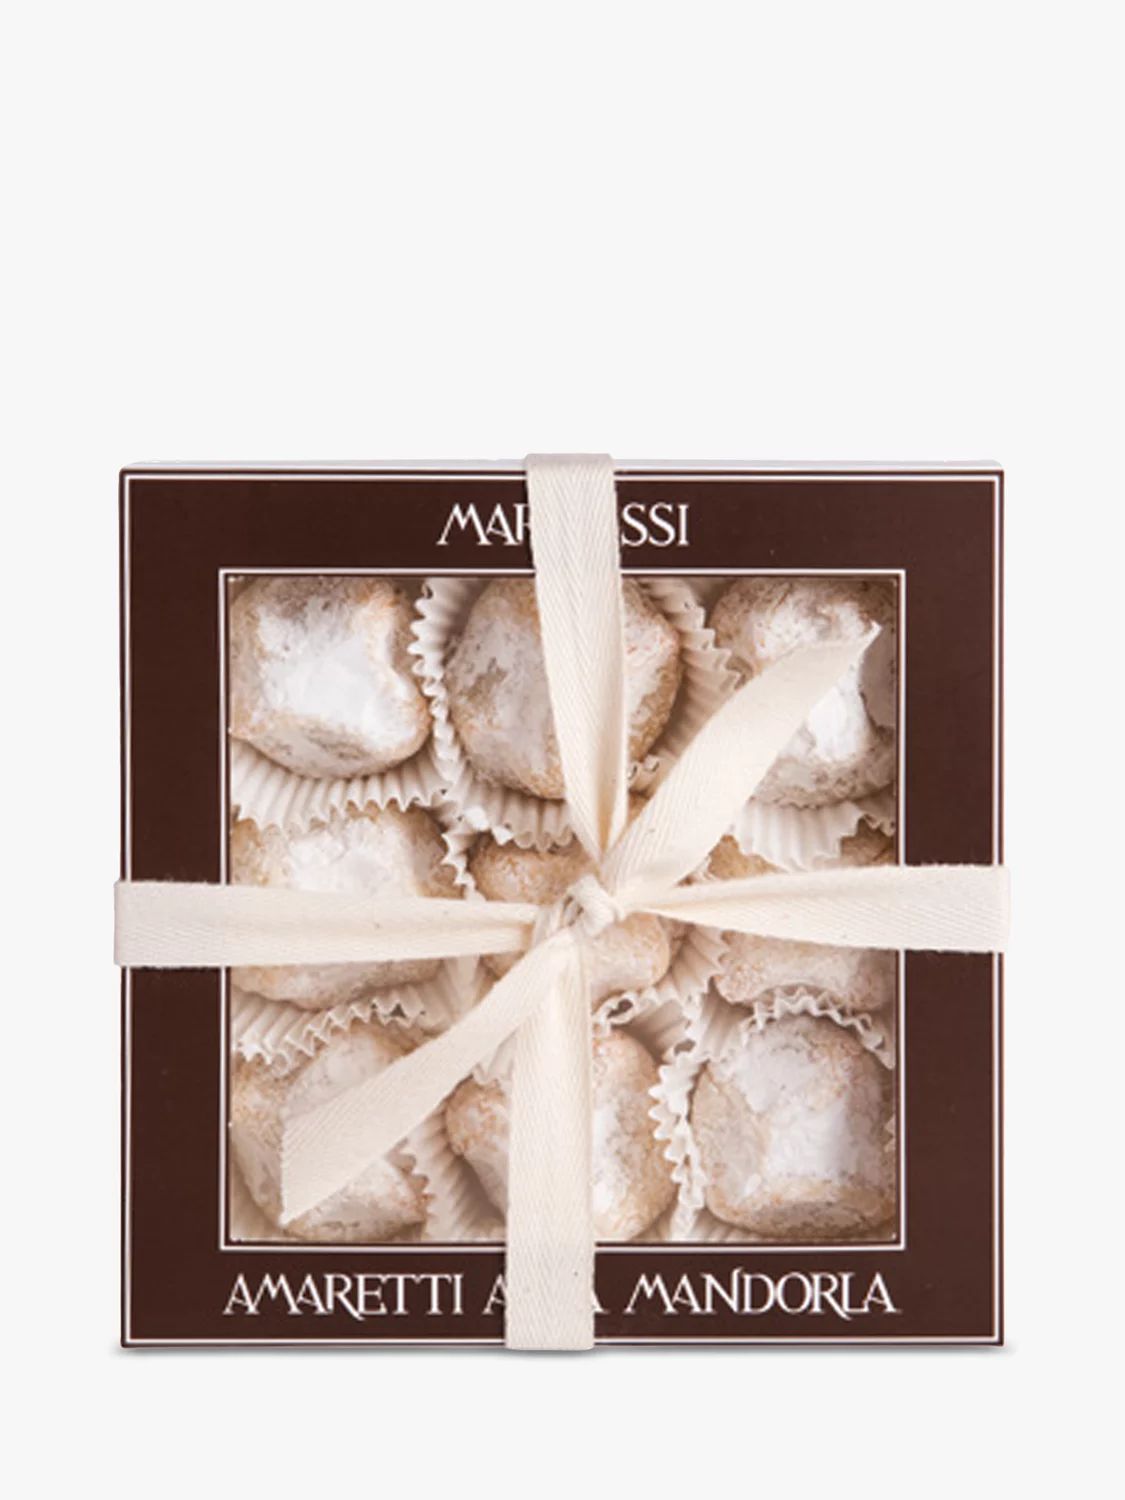 Marabissi Almond Amaretti Box, 190g | John Lewis (UK)